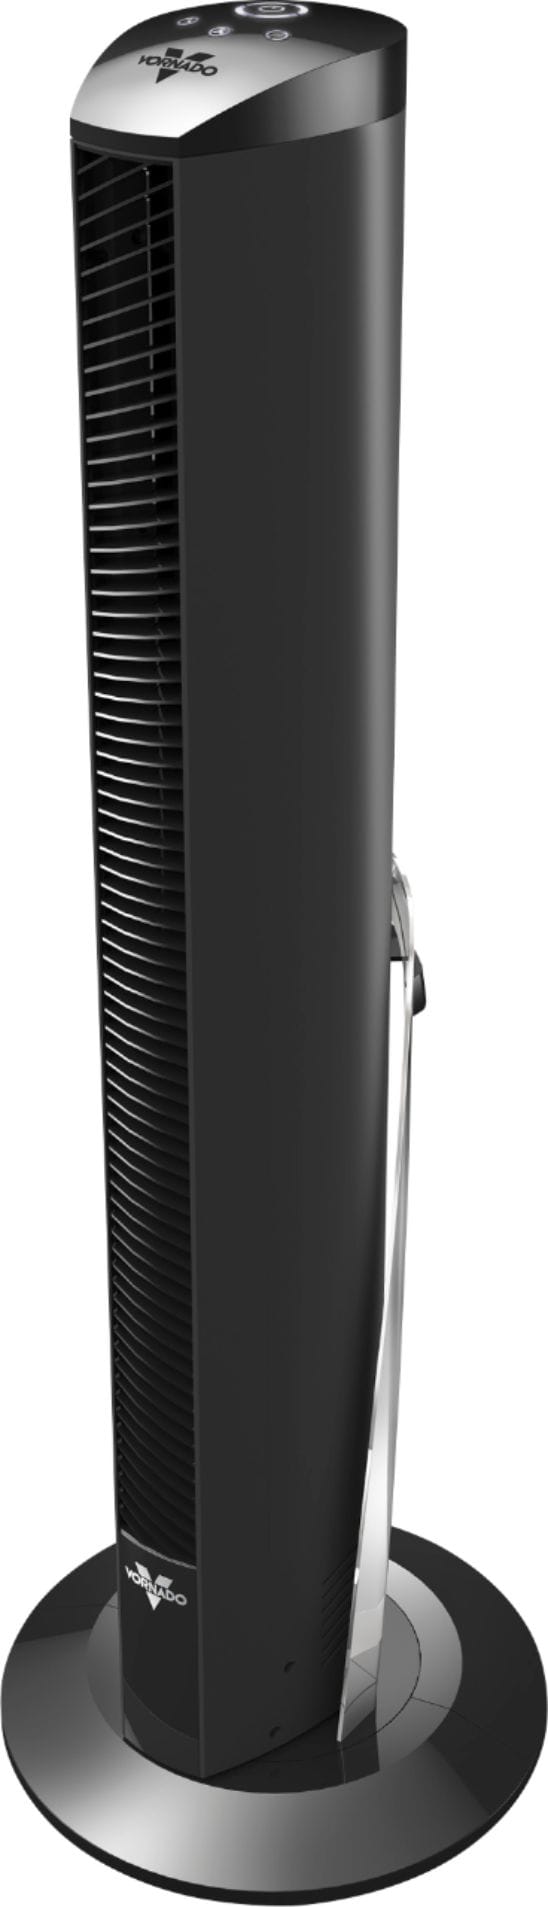 Vornado - OSCR37 Oscillating Tower Fan with Remote - Black_1